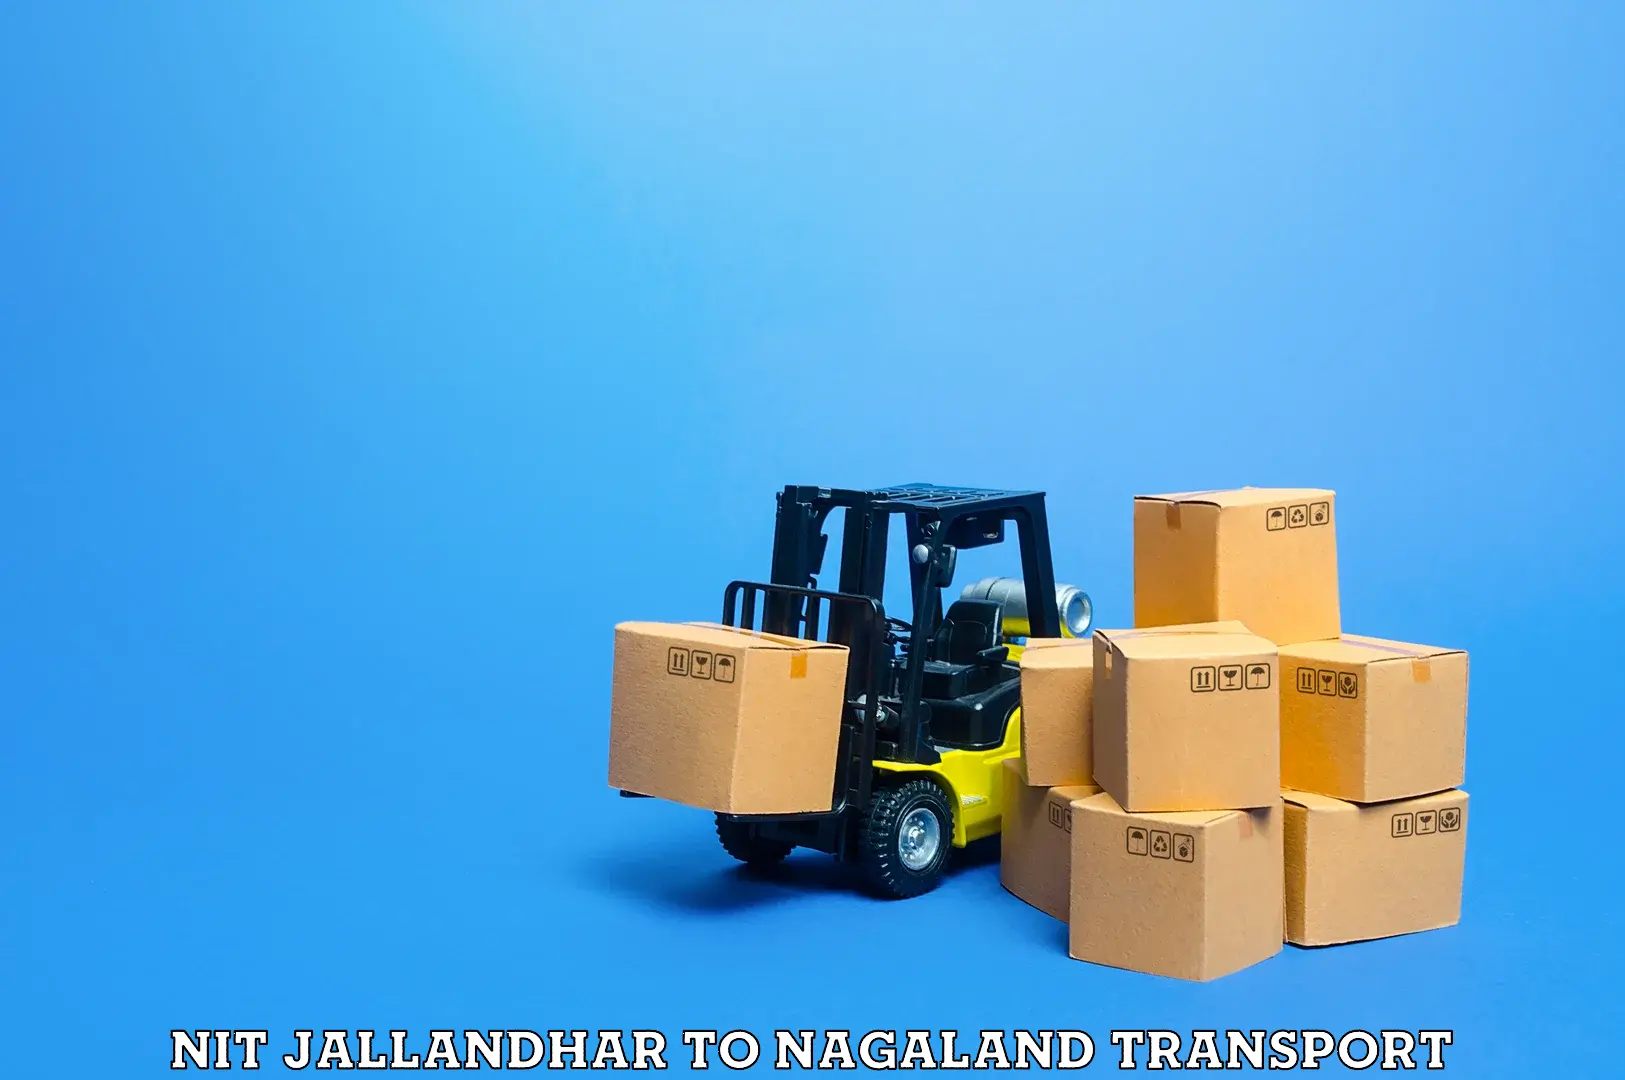 Bike transport service NIT Jallandhar to Dimapur